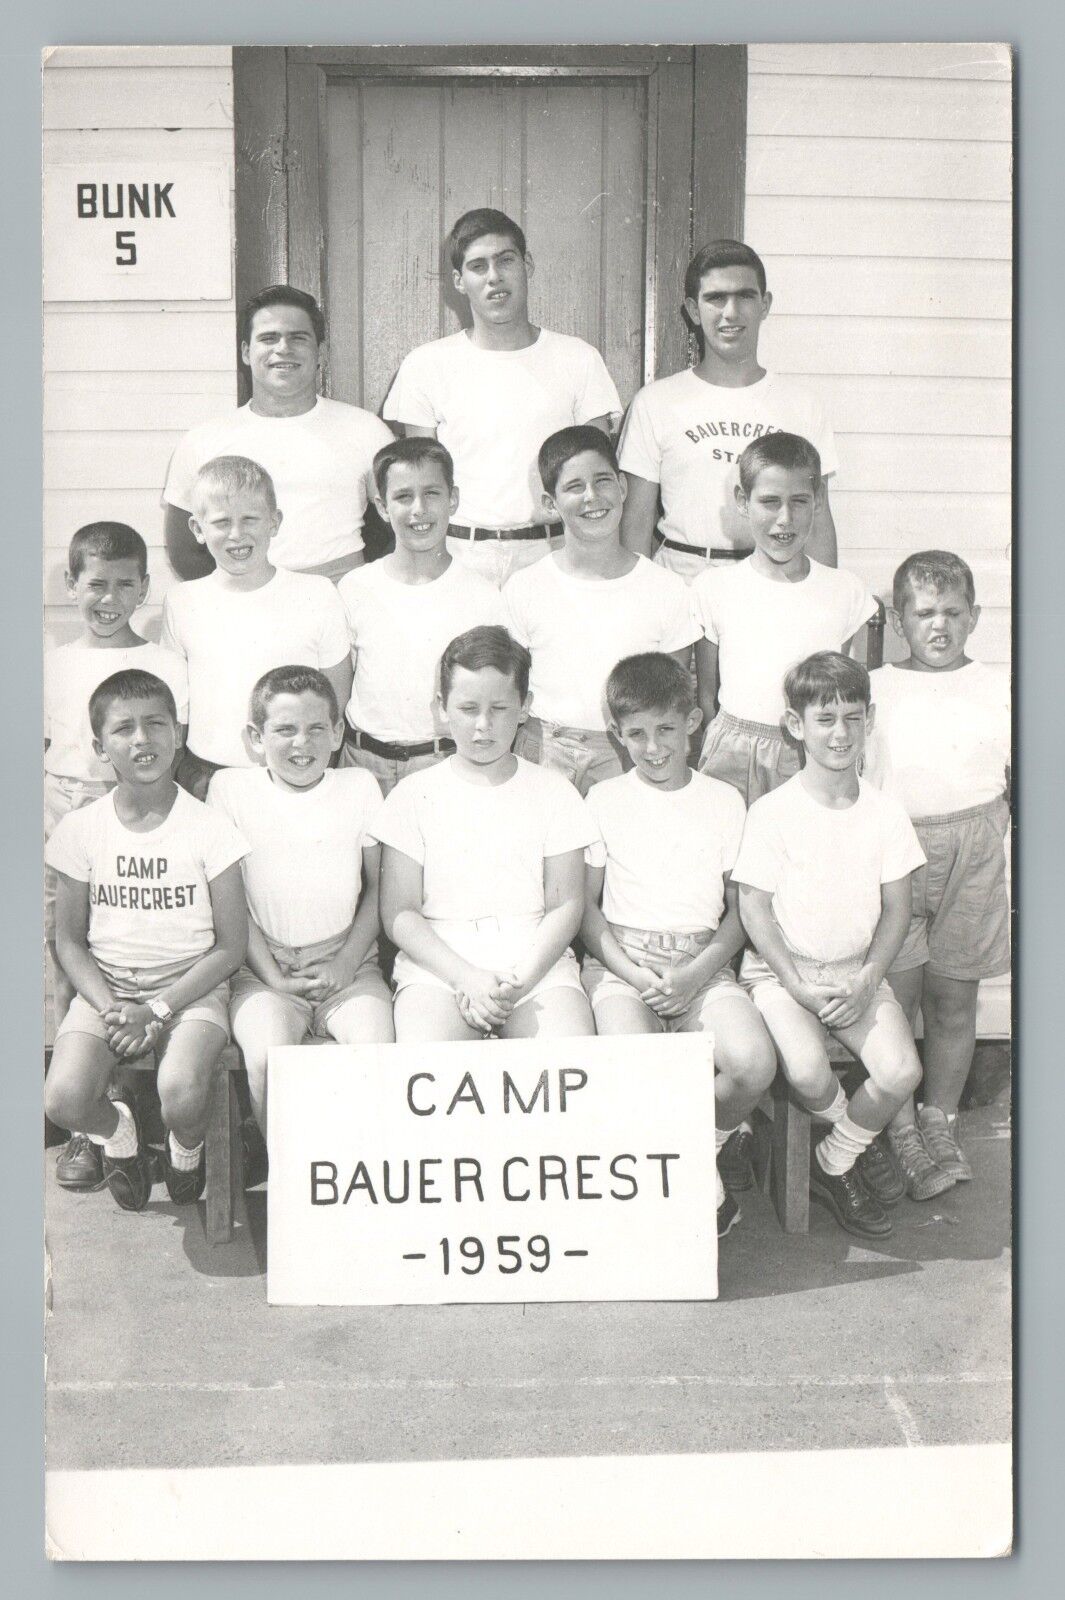 Camp Bauercrest—Jewish Sleepaway RPPC Bunk 5 Vintage Photo—Judaica—Amesbury 1959